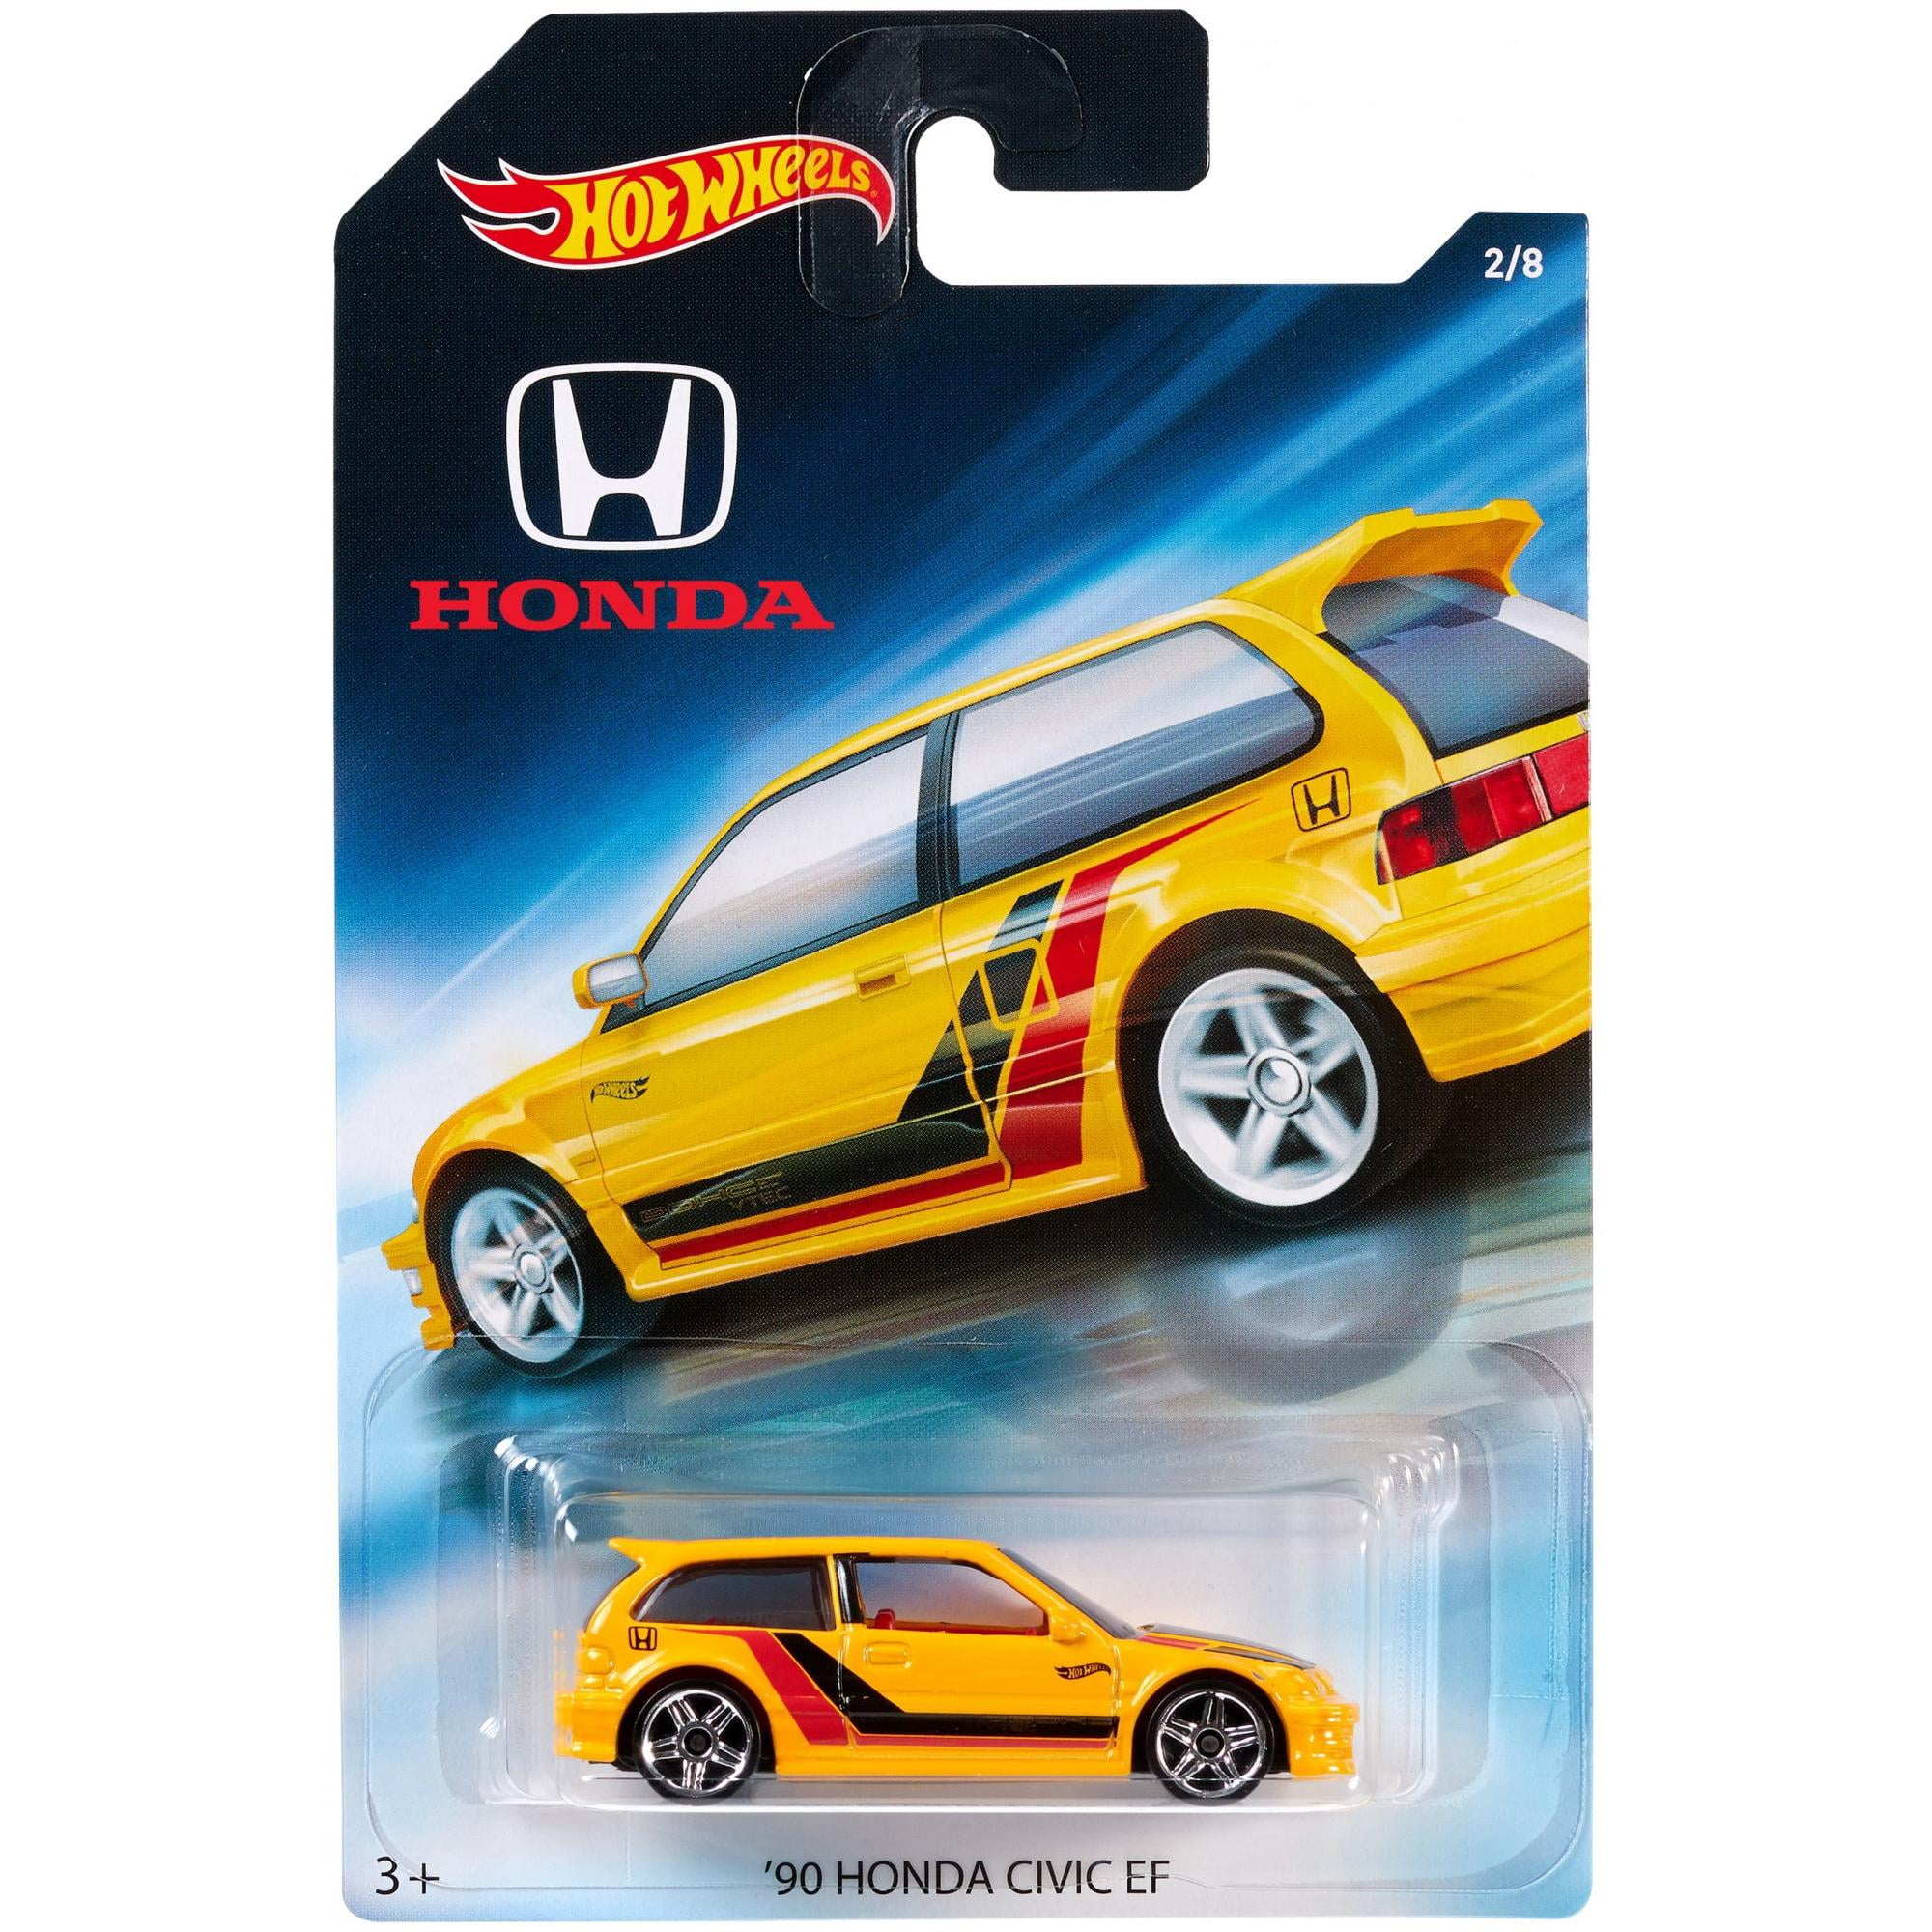 2018 Hot Wheels Honda Series Honda Civic EF 2/8 